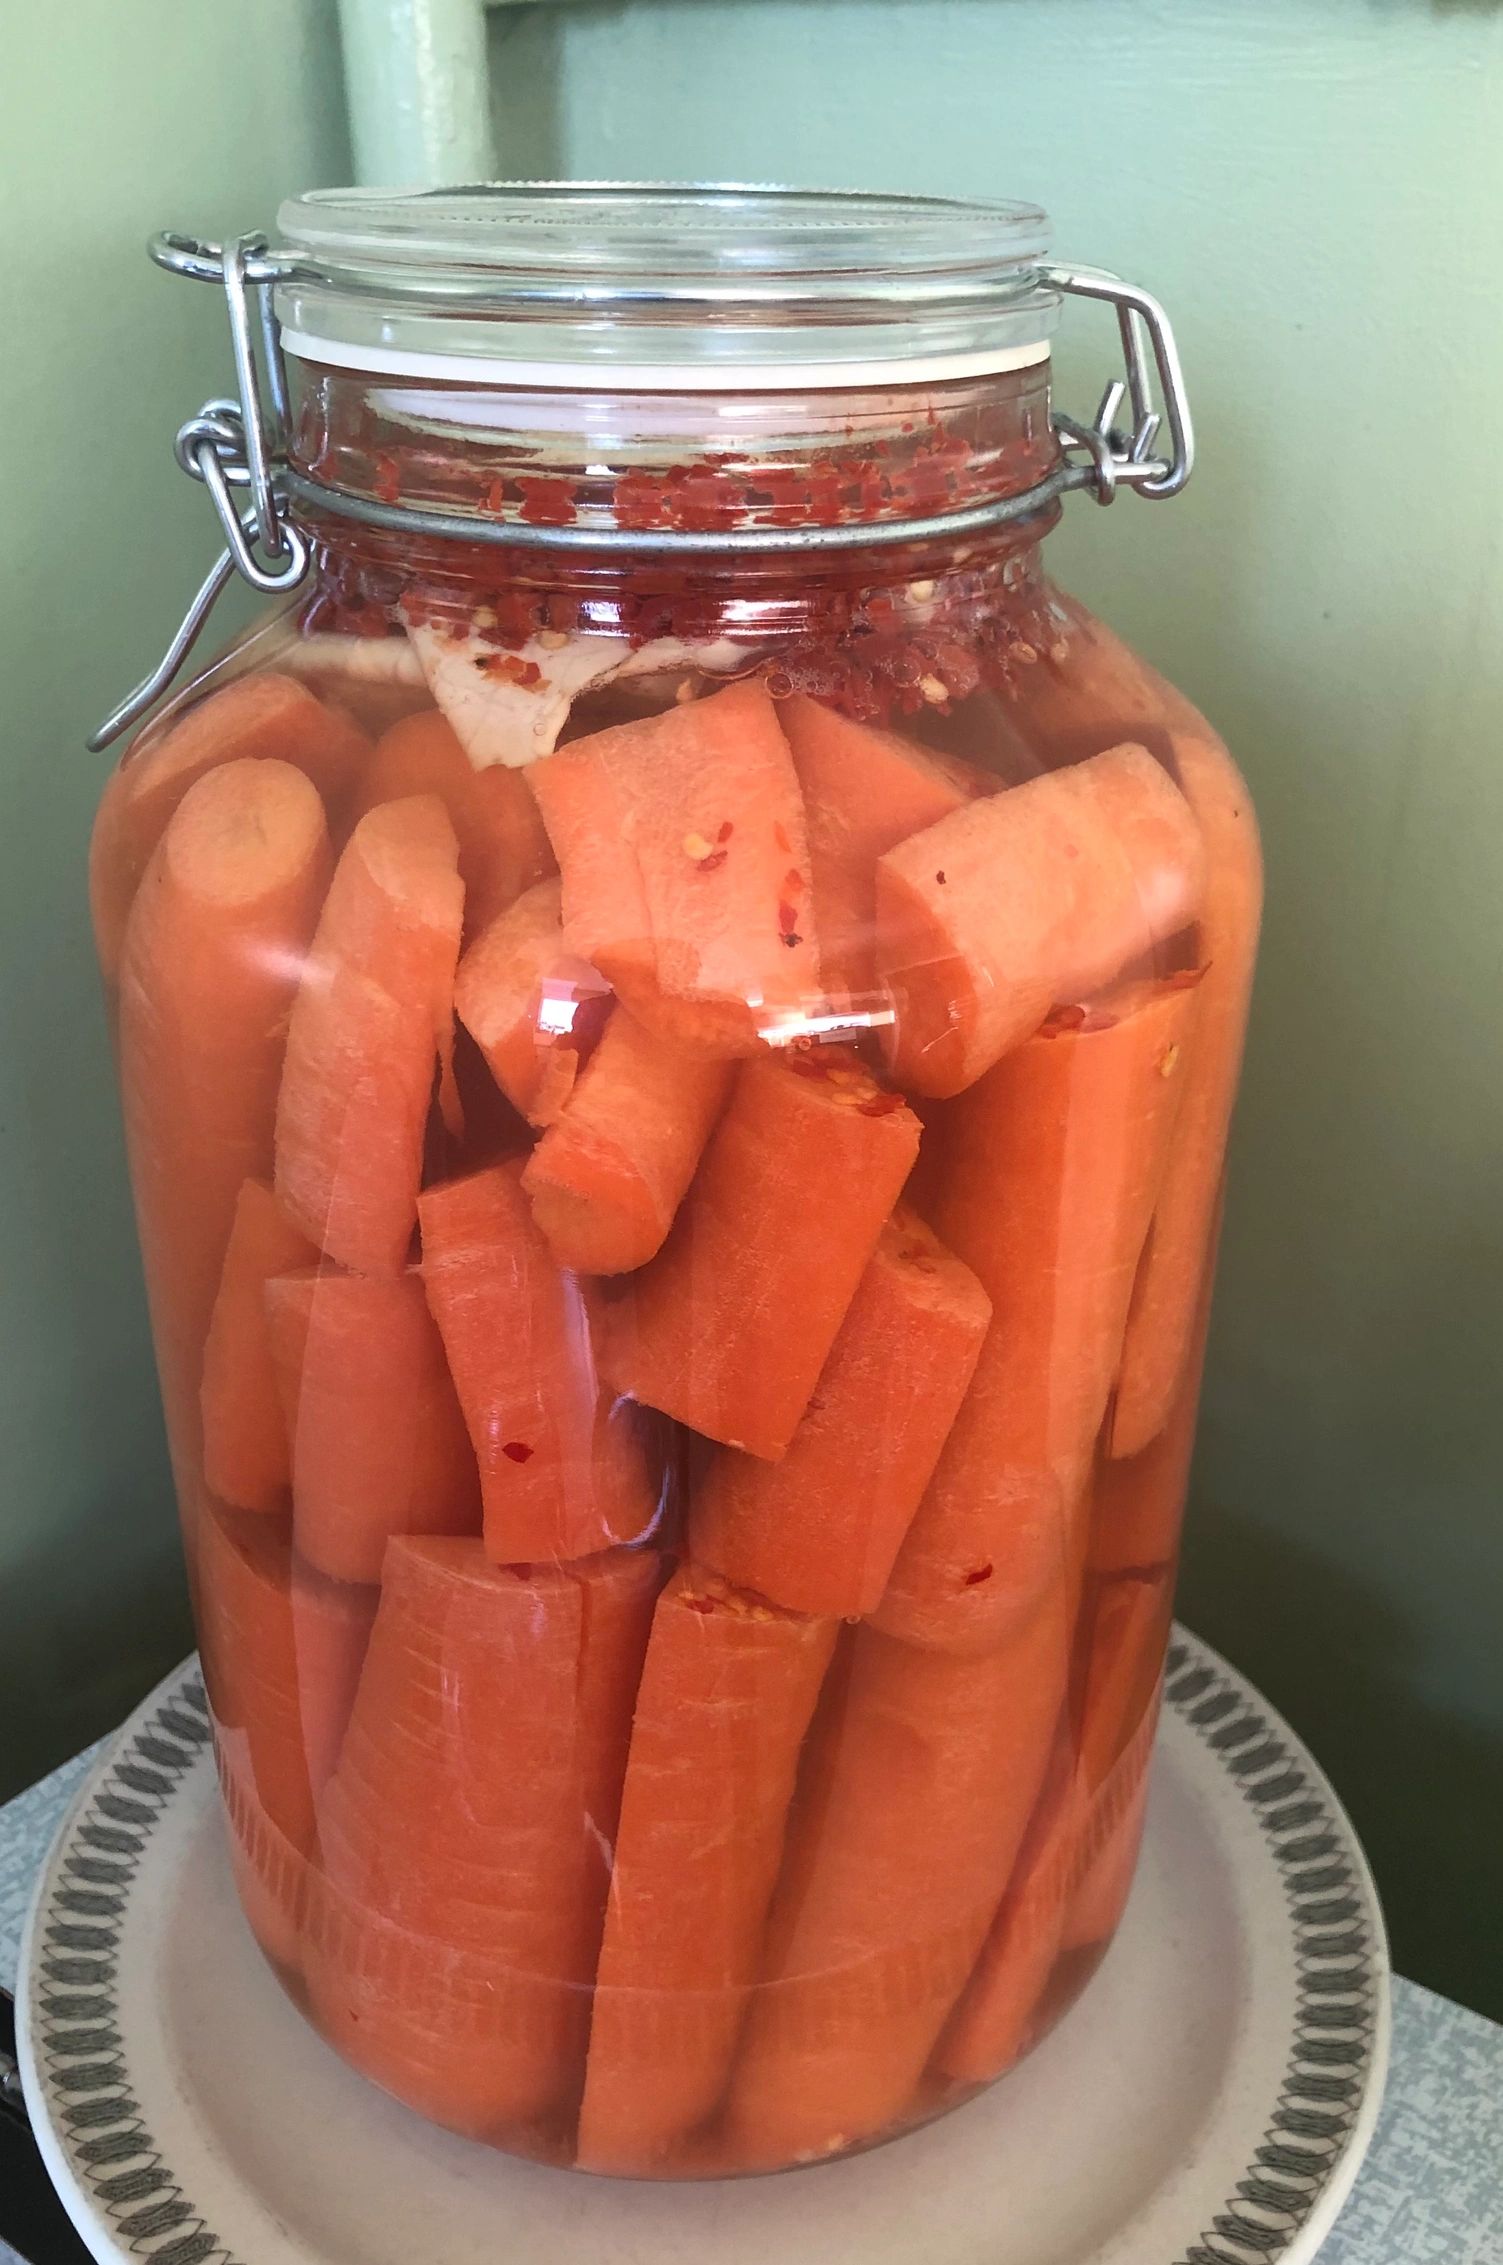 Wild fermented Carrots fermenting in a jar.